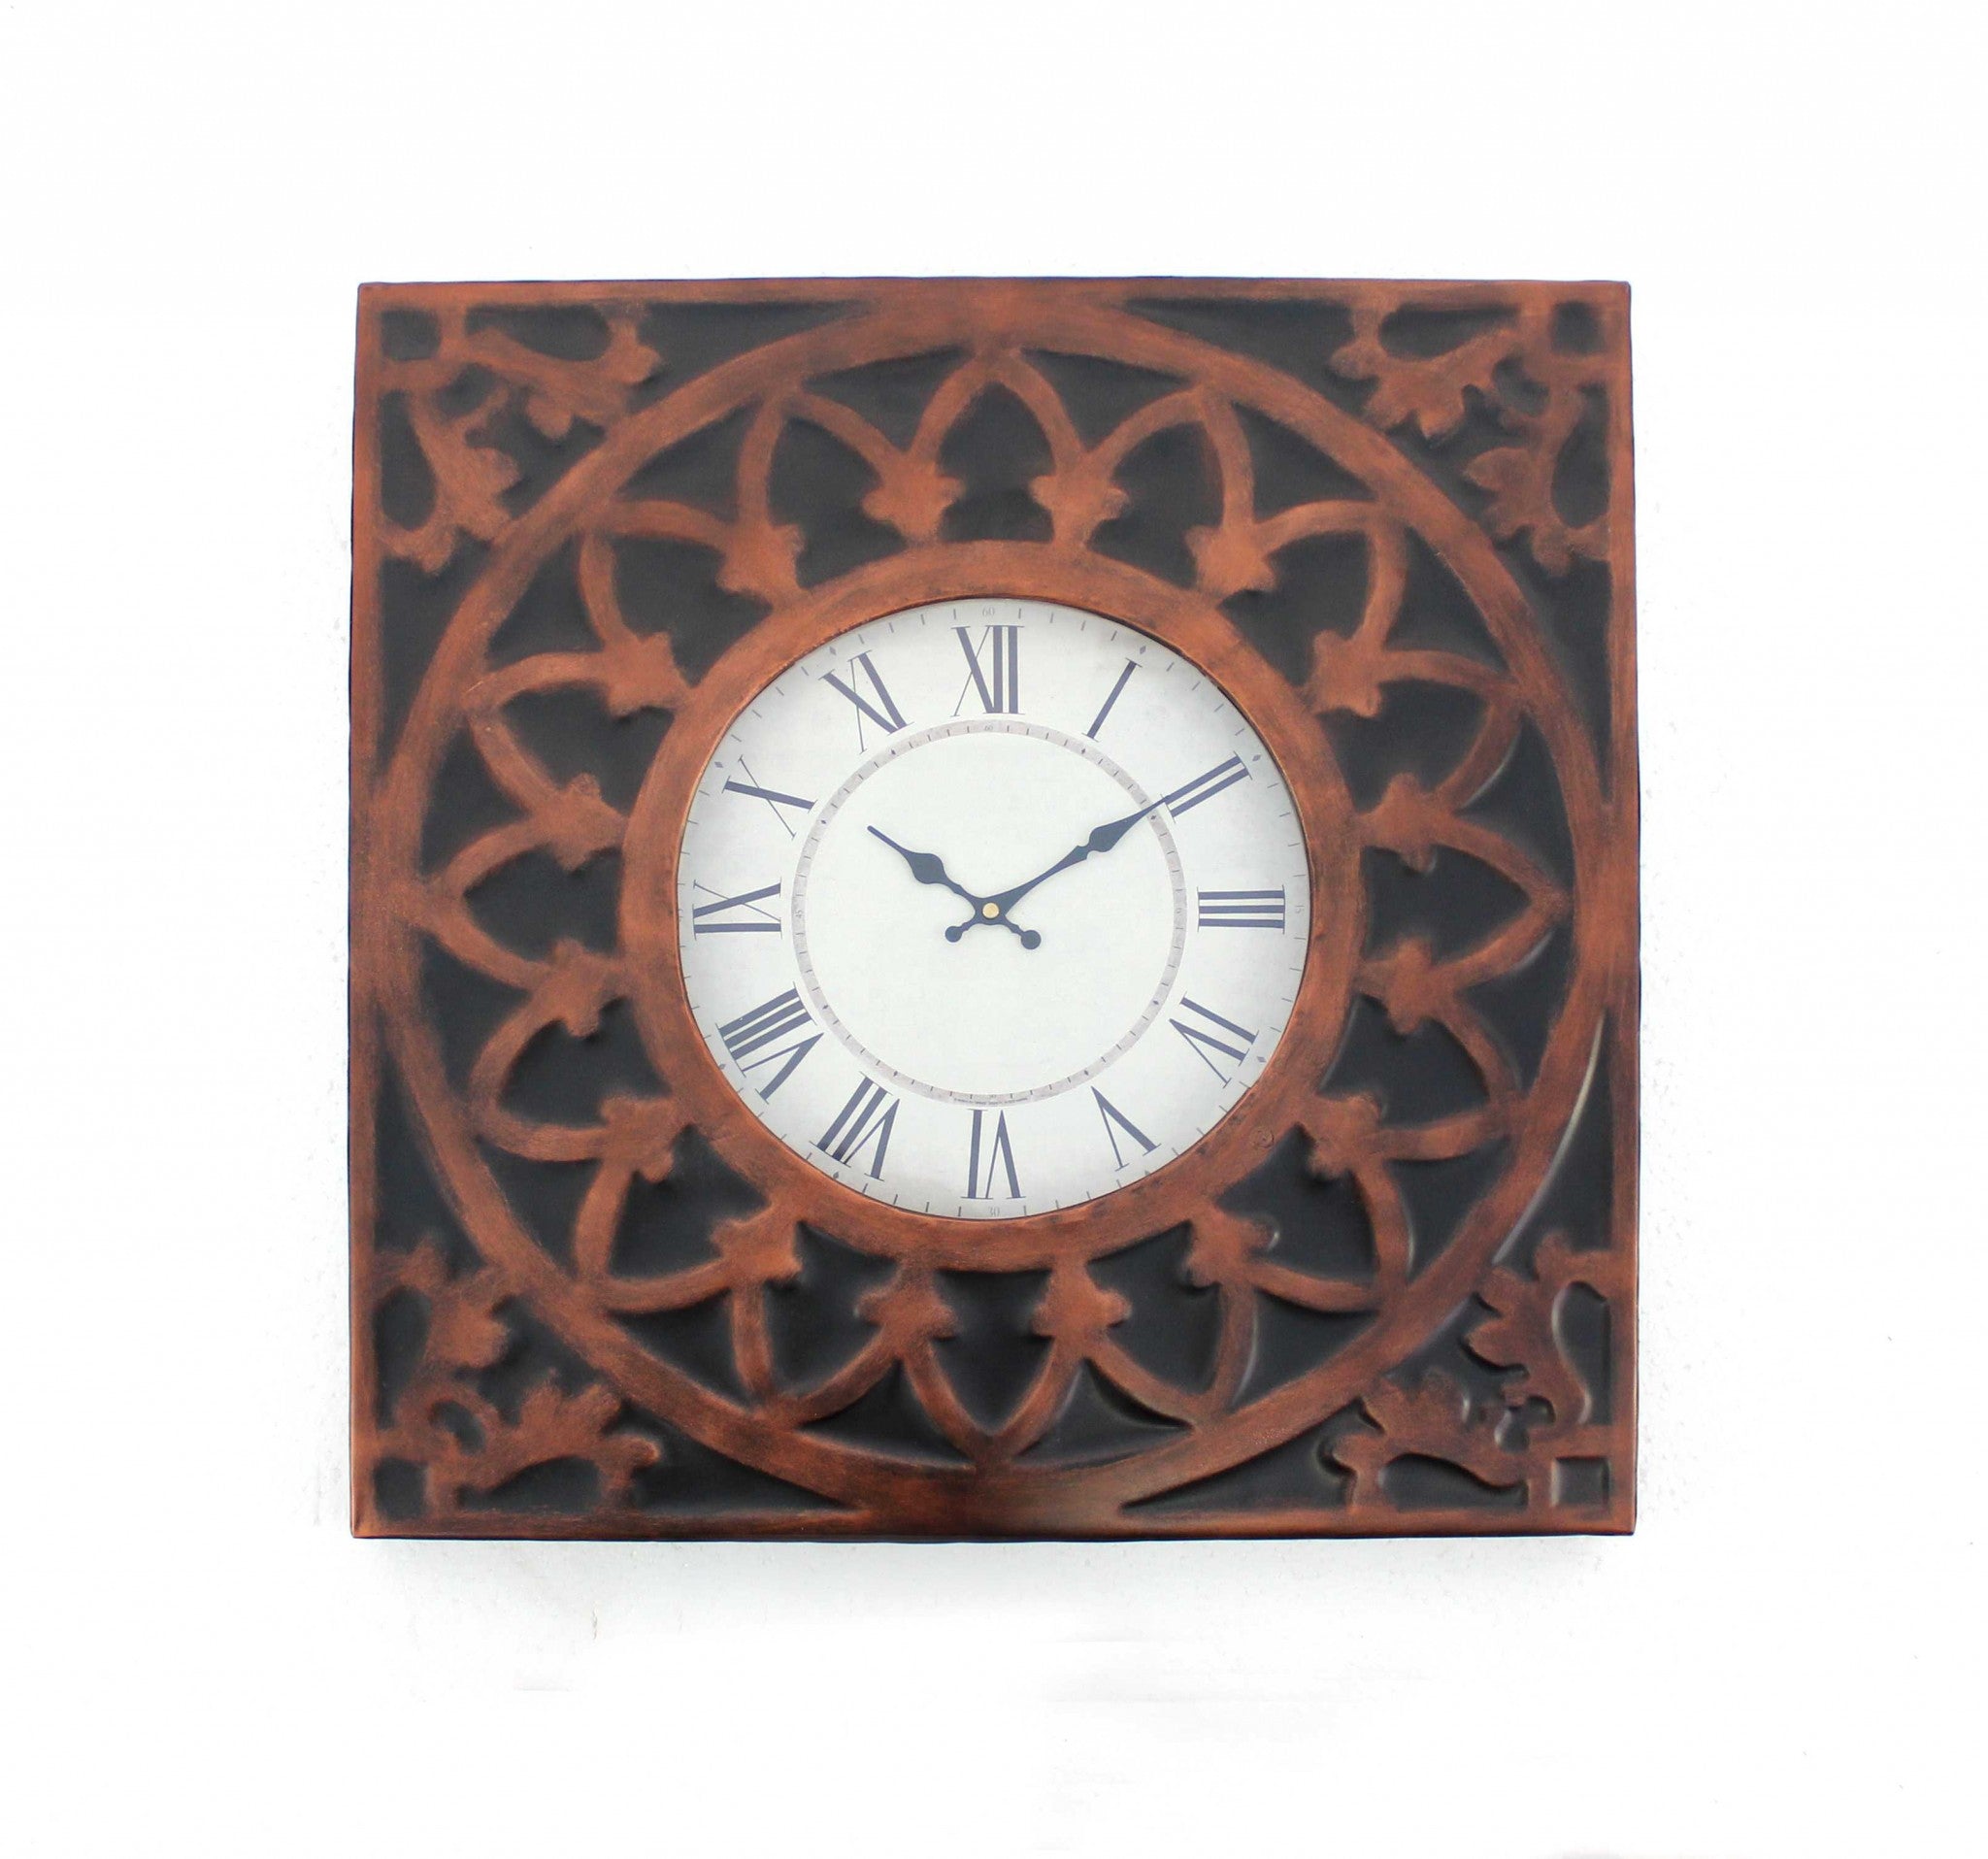 23" Square Bronze Glass Analog Wall Clock